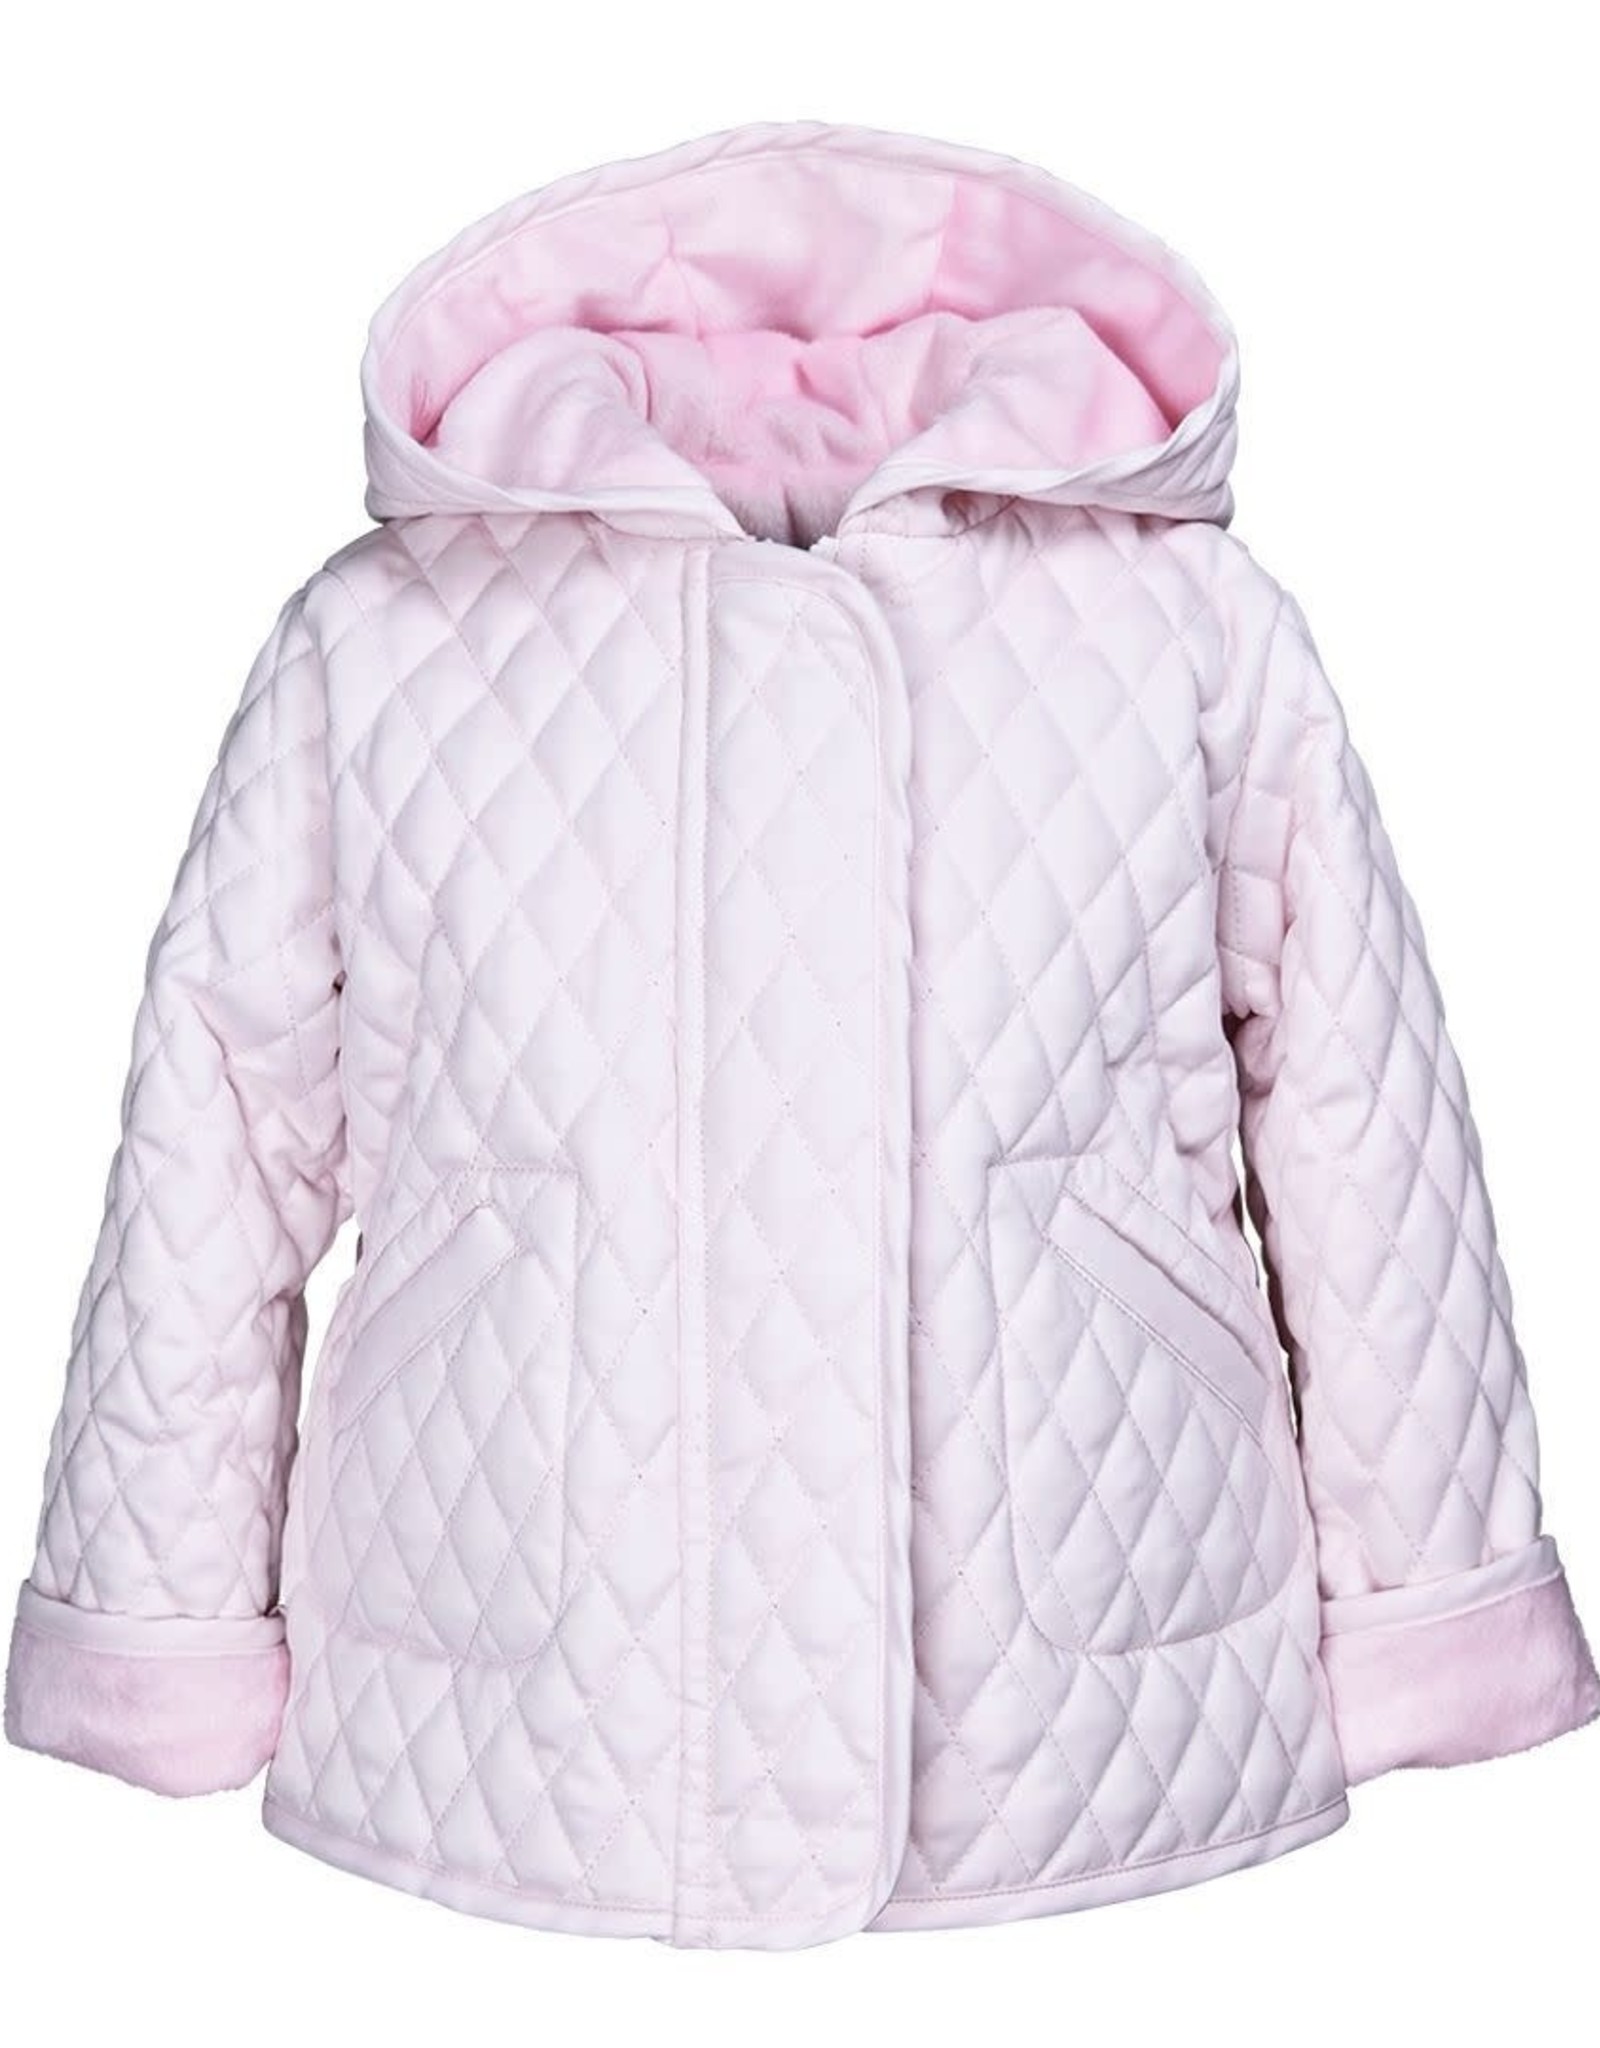 Widgeon Light Pink Hooded Barn Jacket